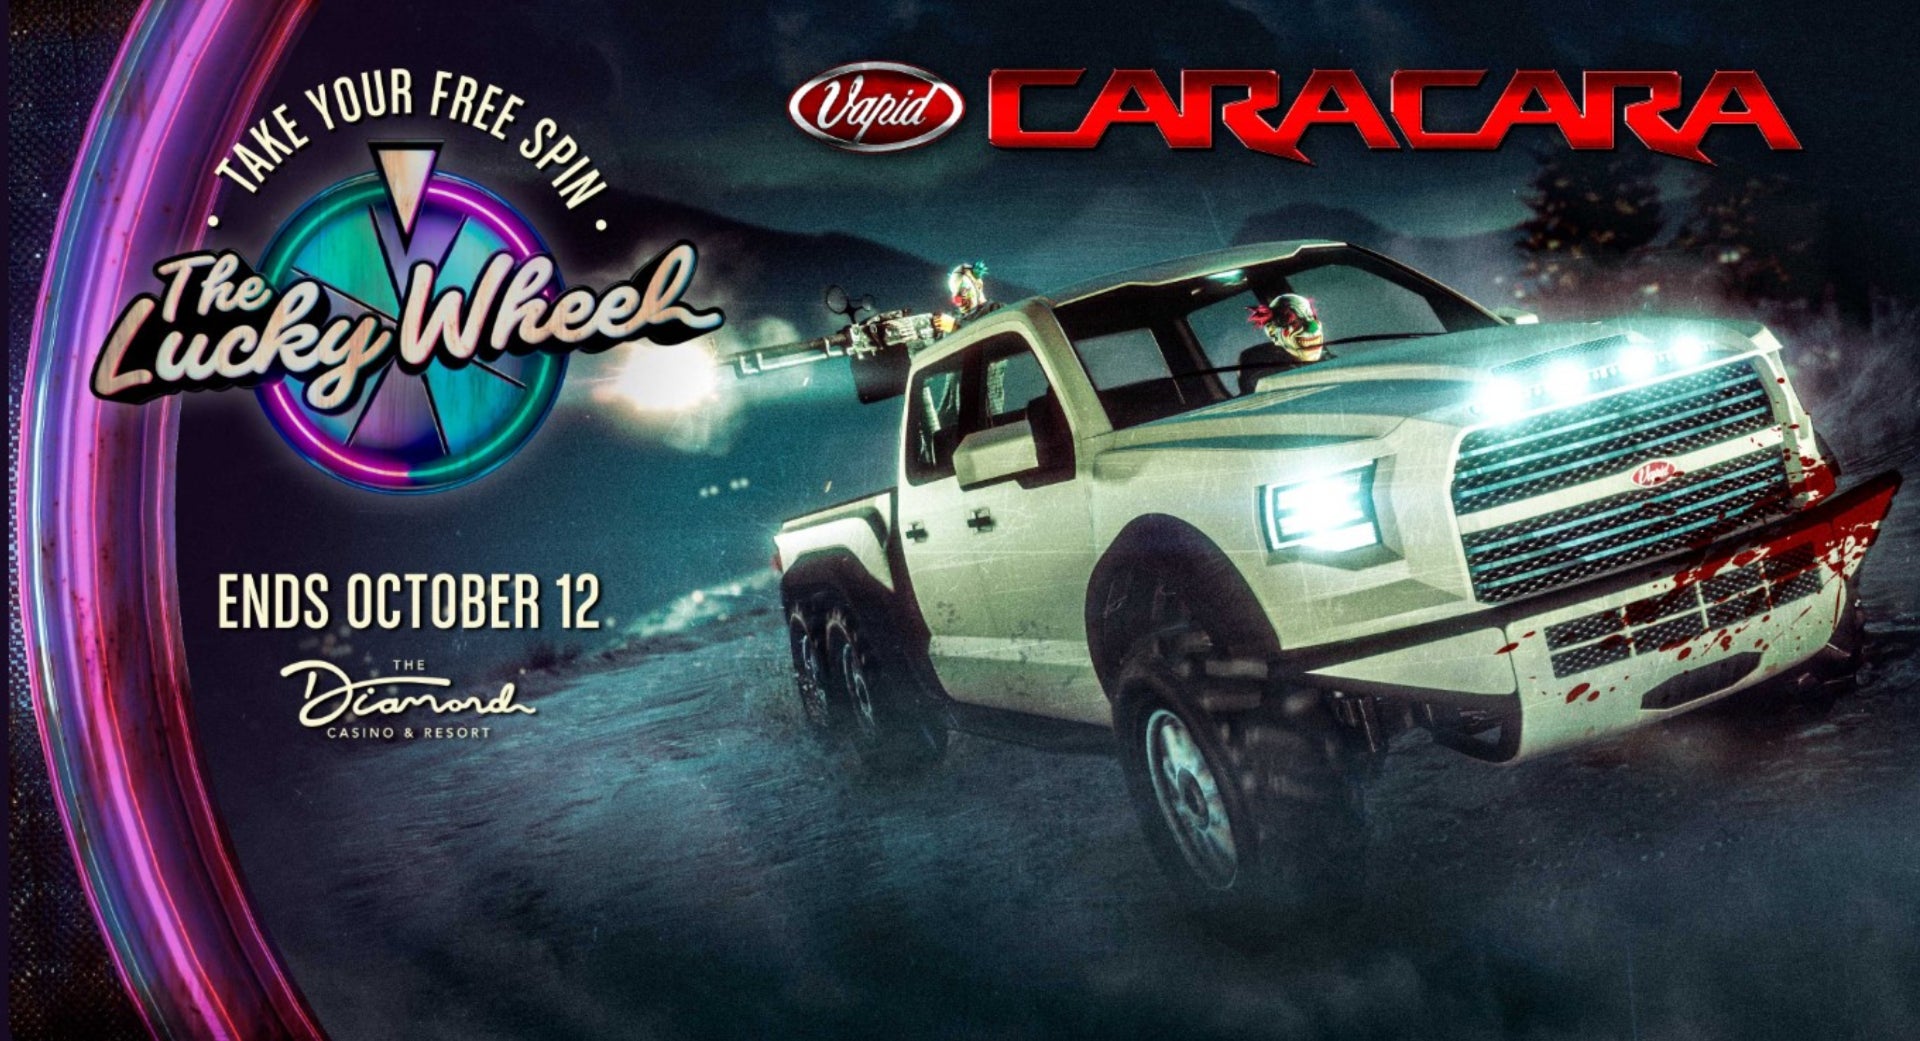 GTA Online Lucky Wheel announcement for the Vapid Caracara, ending October 12